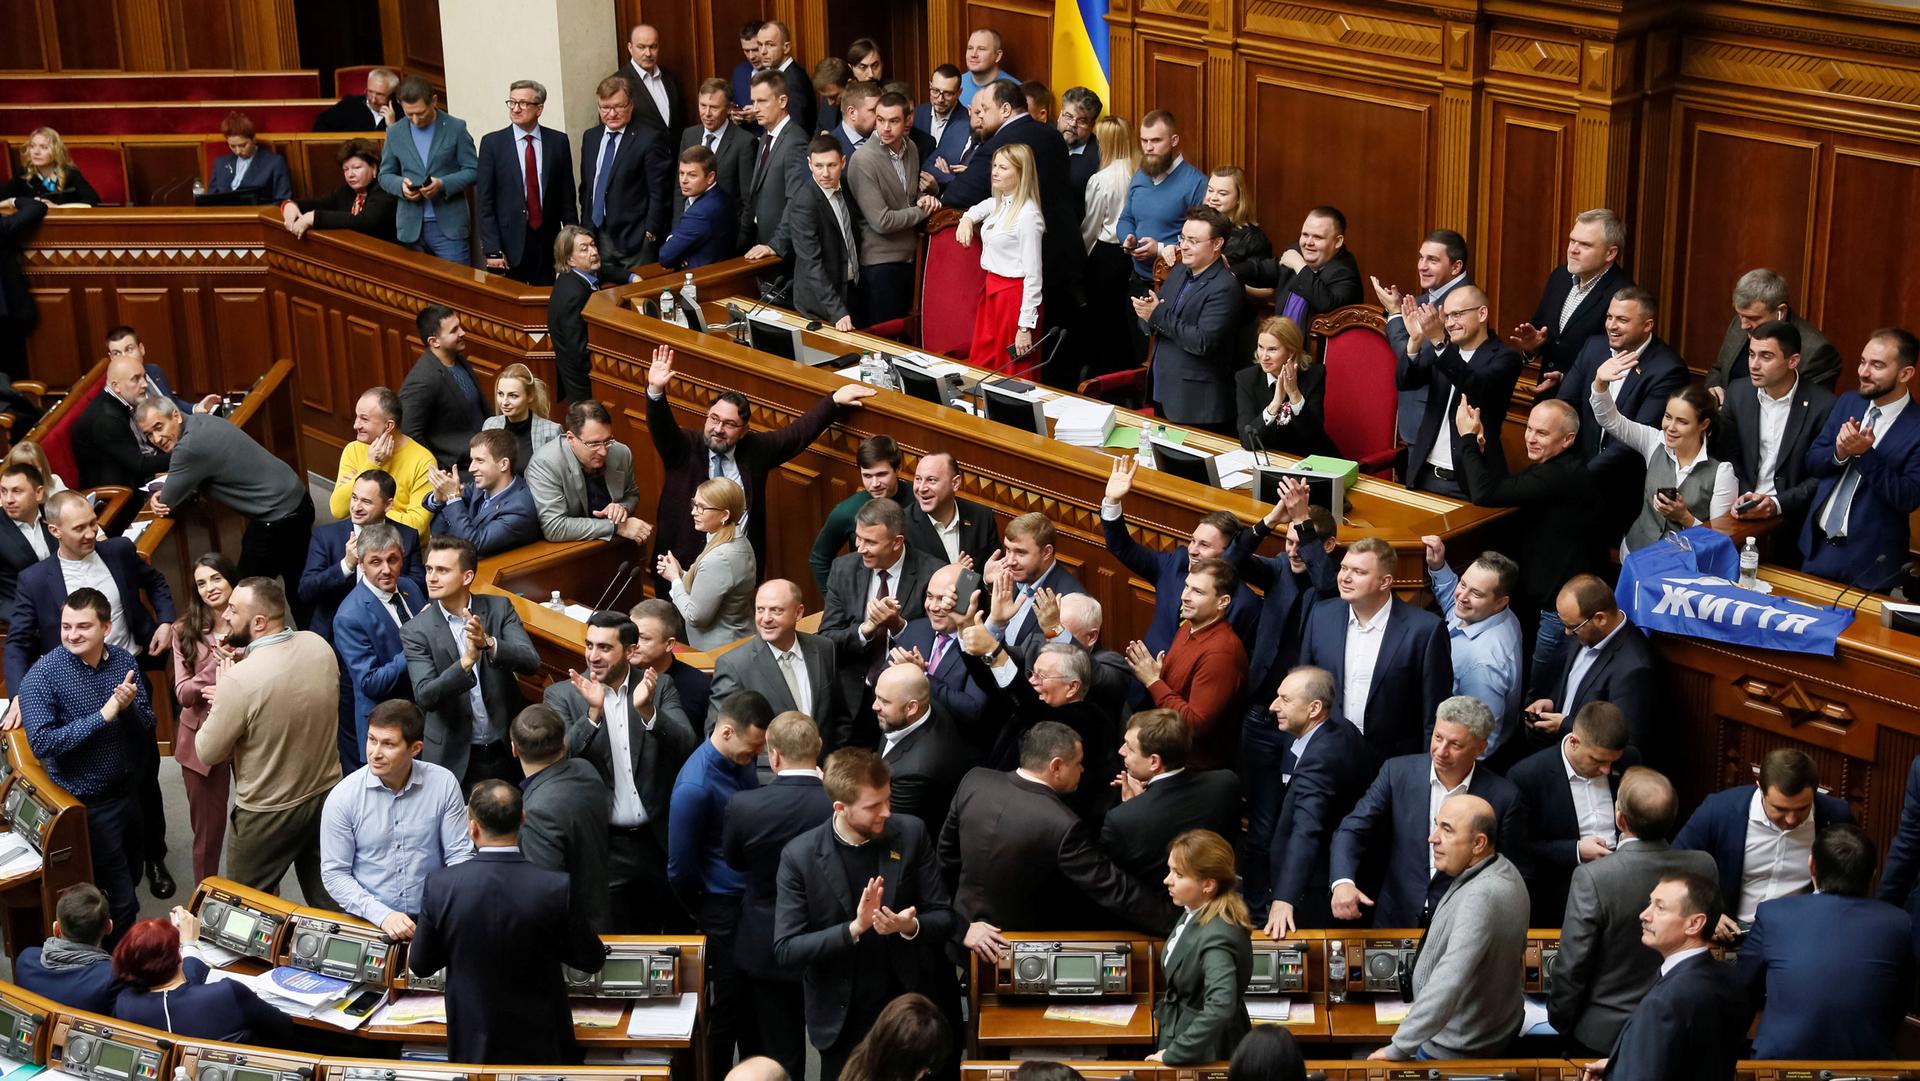 Parliamentarians in a legislative chamber